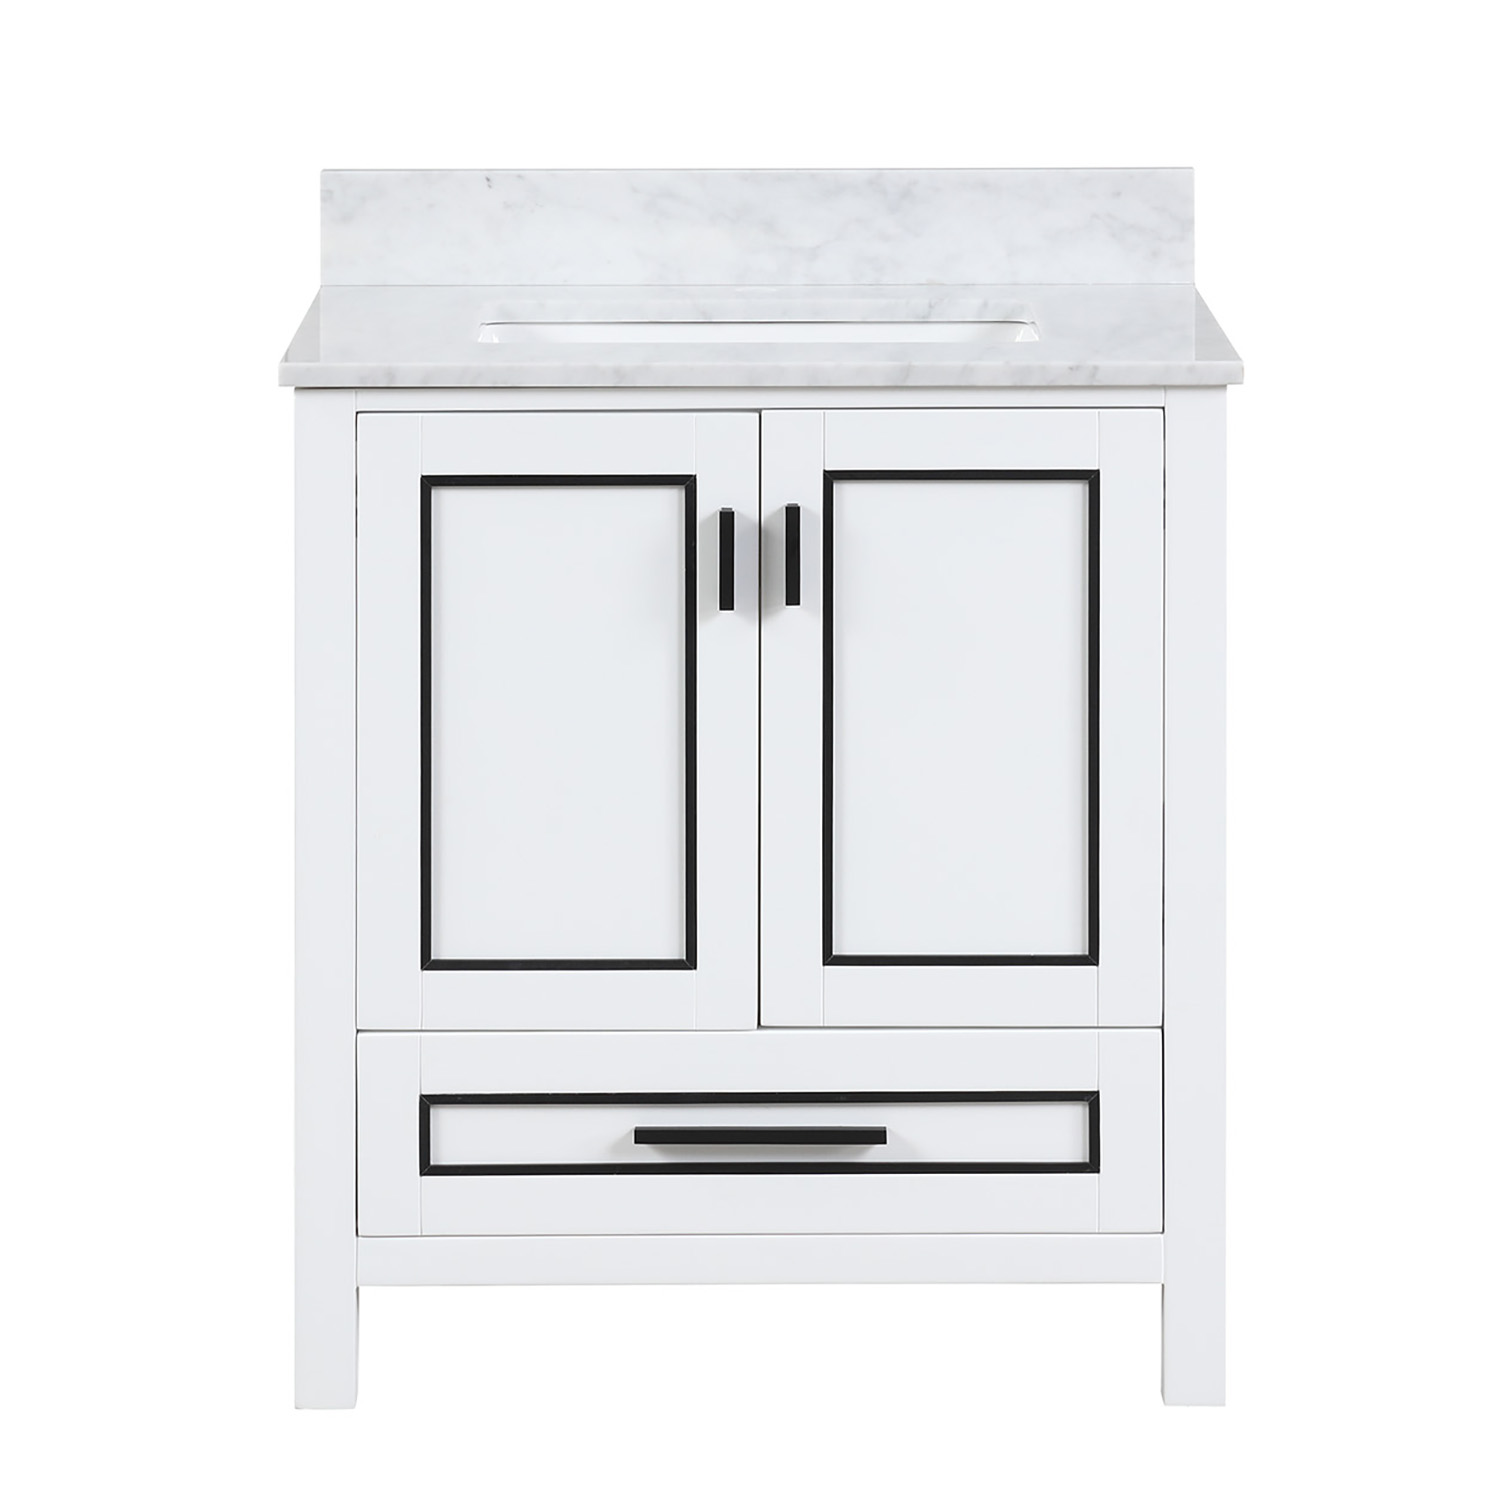 Duko VV230 Rectangular Sink White Bathroom Vanity Cabinet with Carrara White Marble Countertop